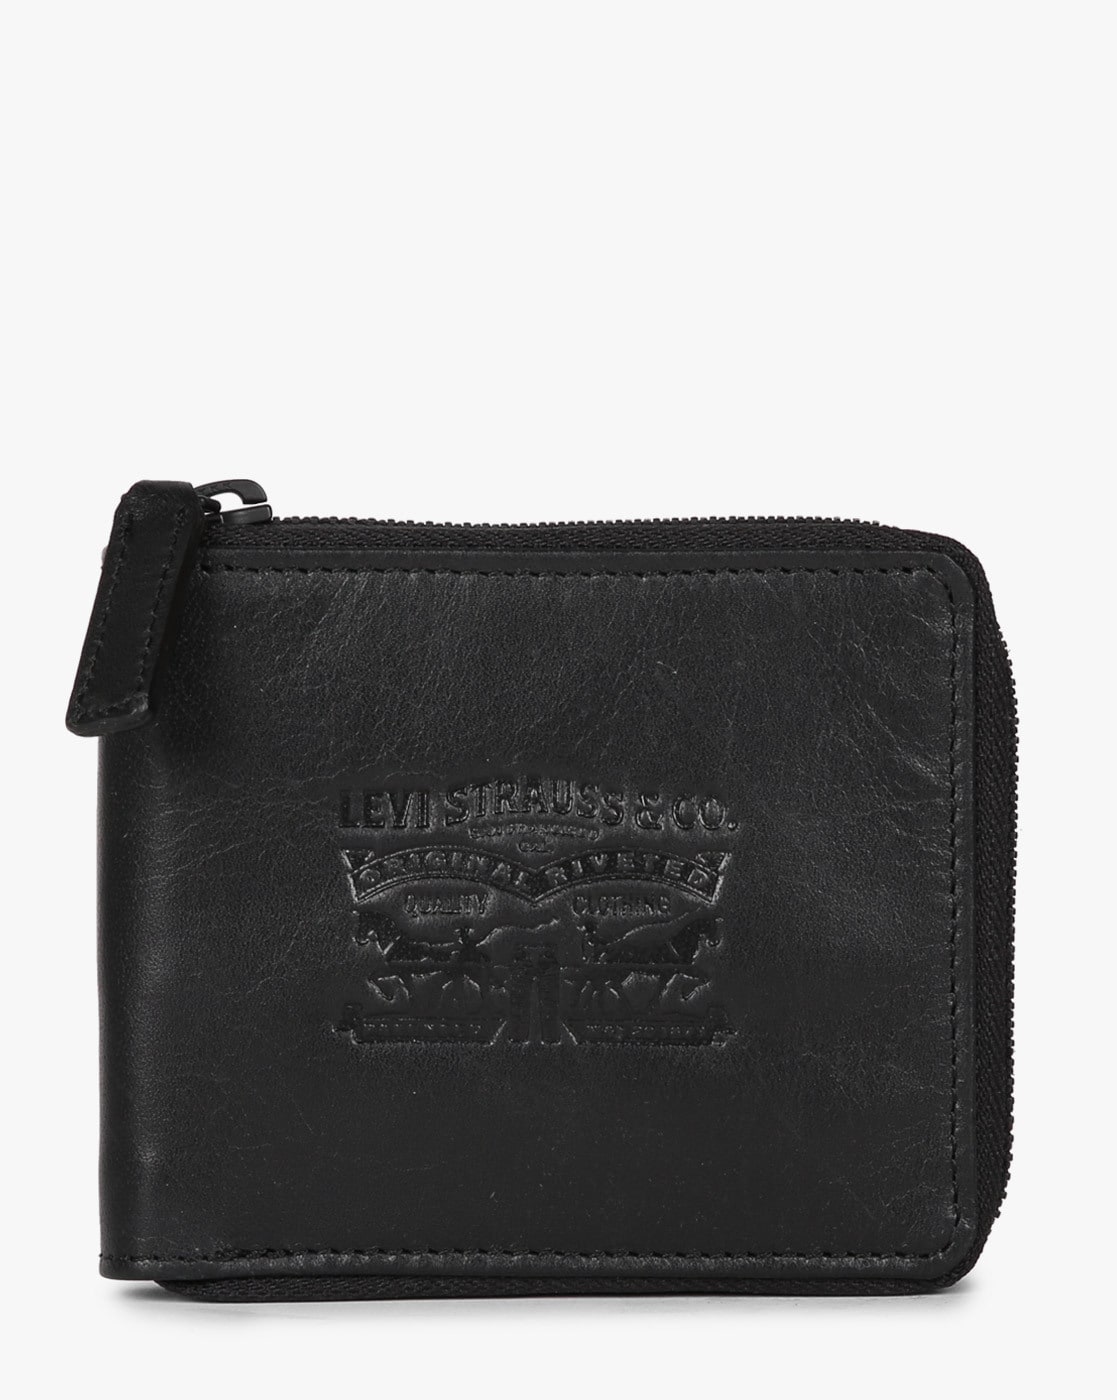 levis wallet with zipper